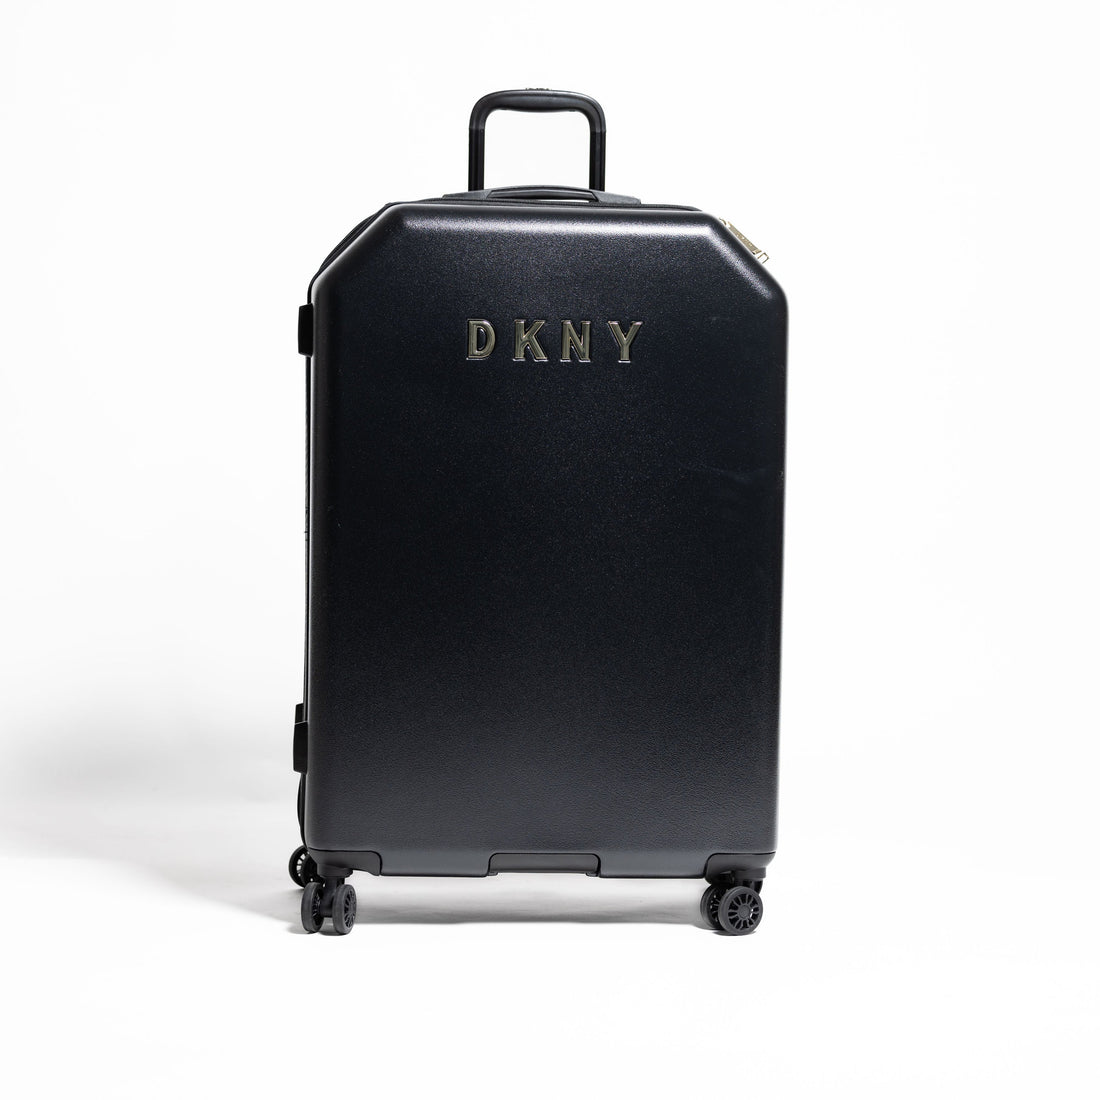 DKNY Black Large Luggage_DH818ML7_BLK_01